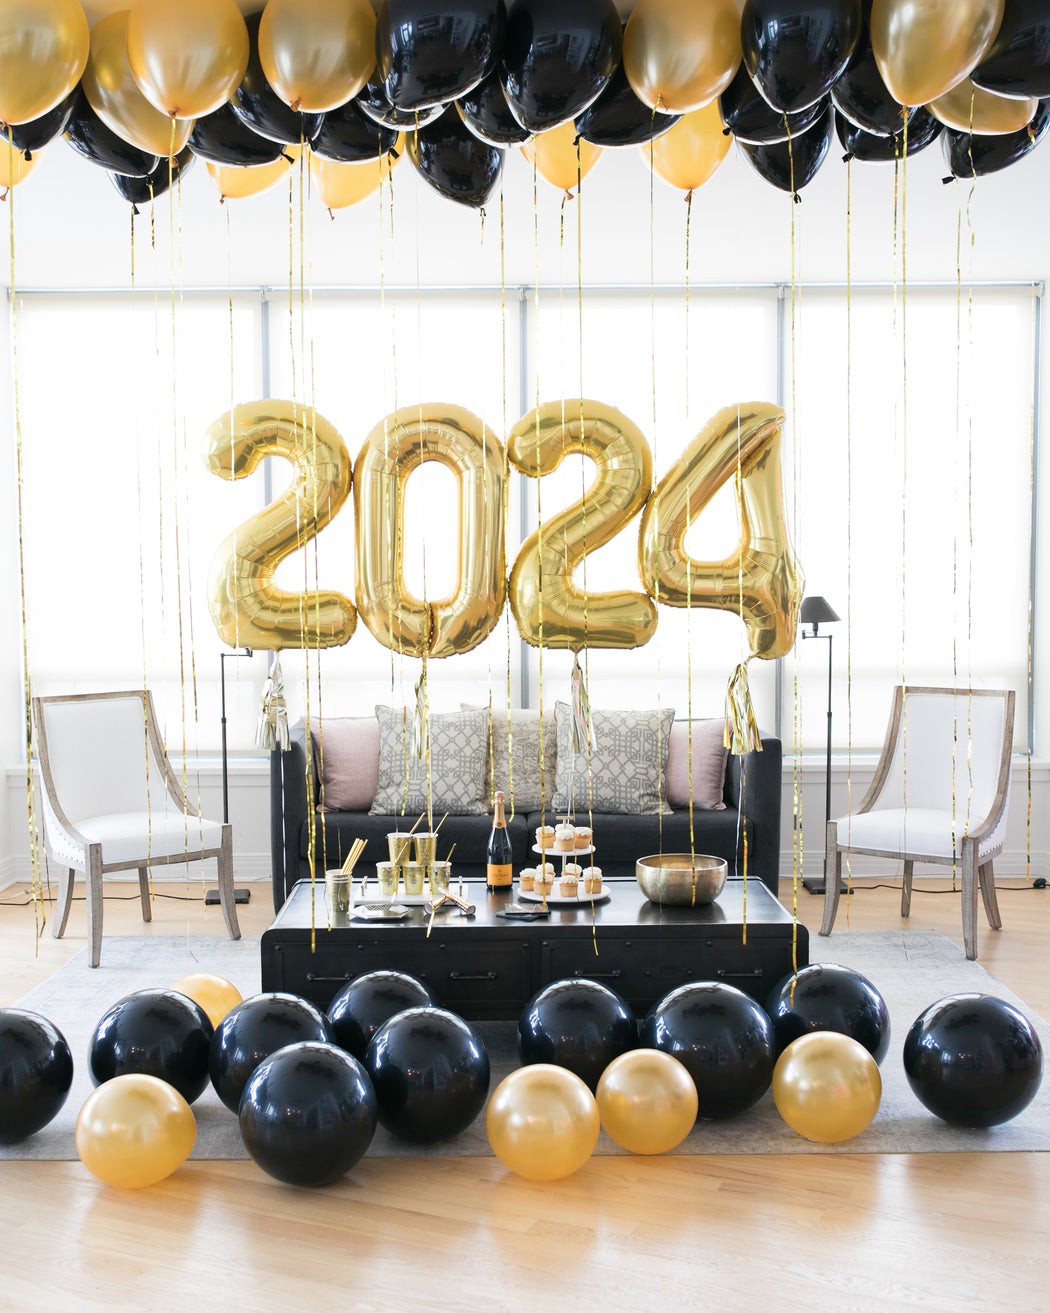 nye-2024-balloons-gold-black-balloons-bouquet